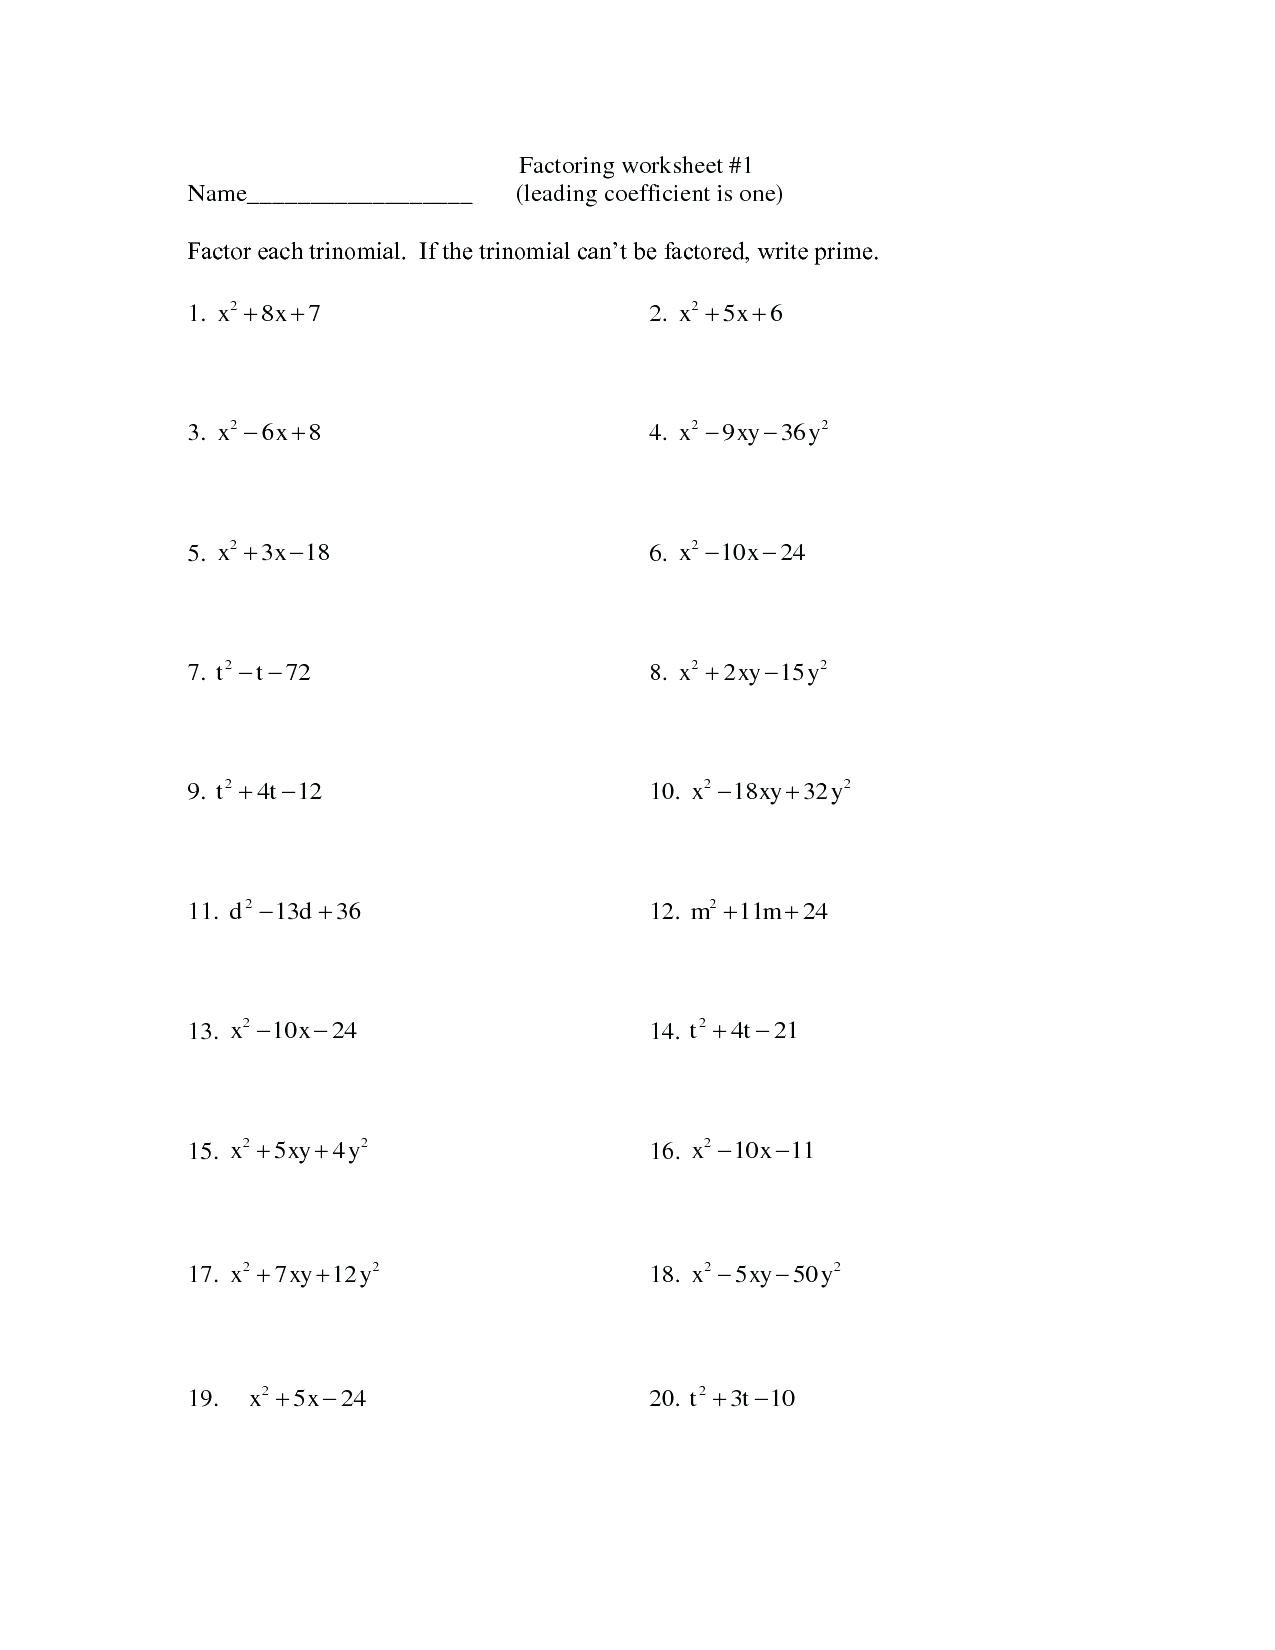 Factoring Quadratic Trinomials Worksheet Factoring Trinomials Worksheet A 1 Nidecmege